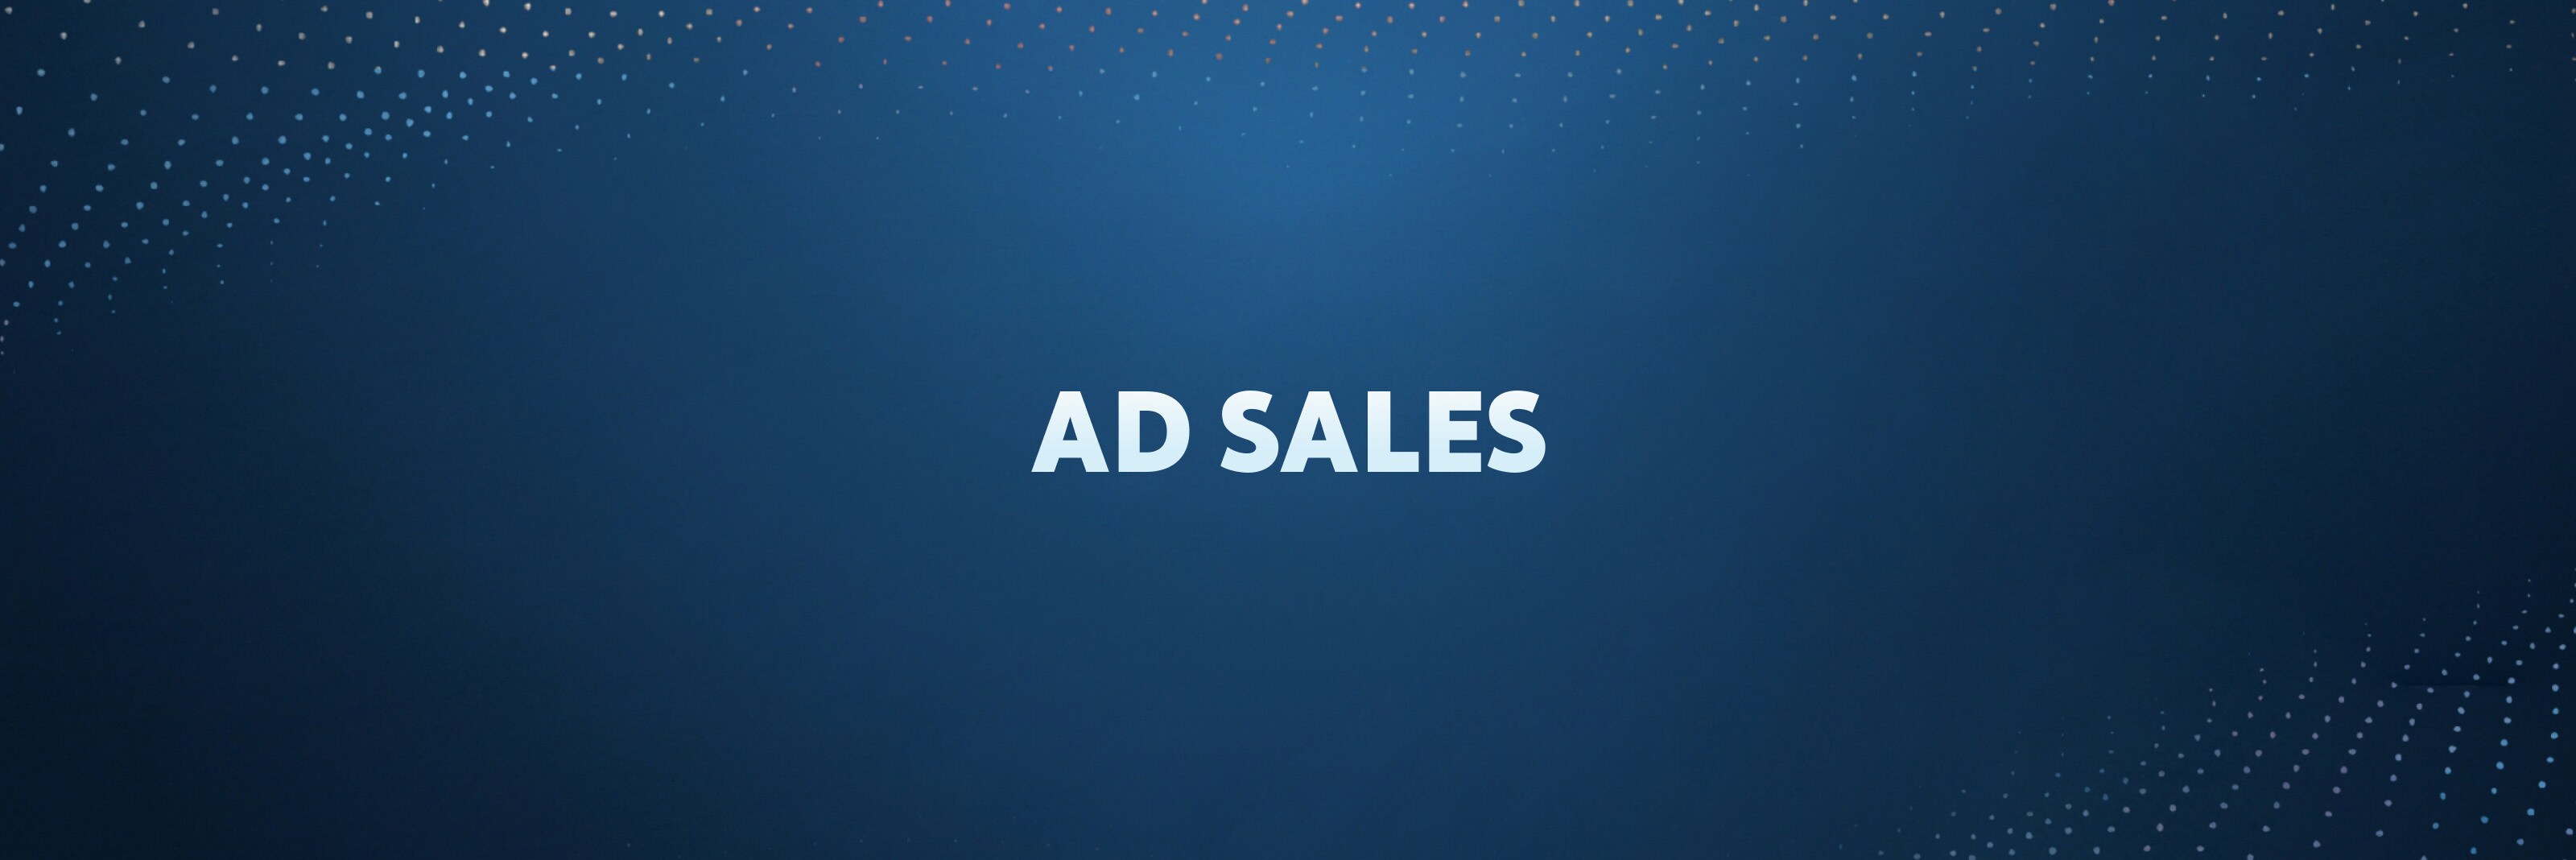 Disney Advertising | Ad Sales